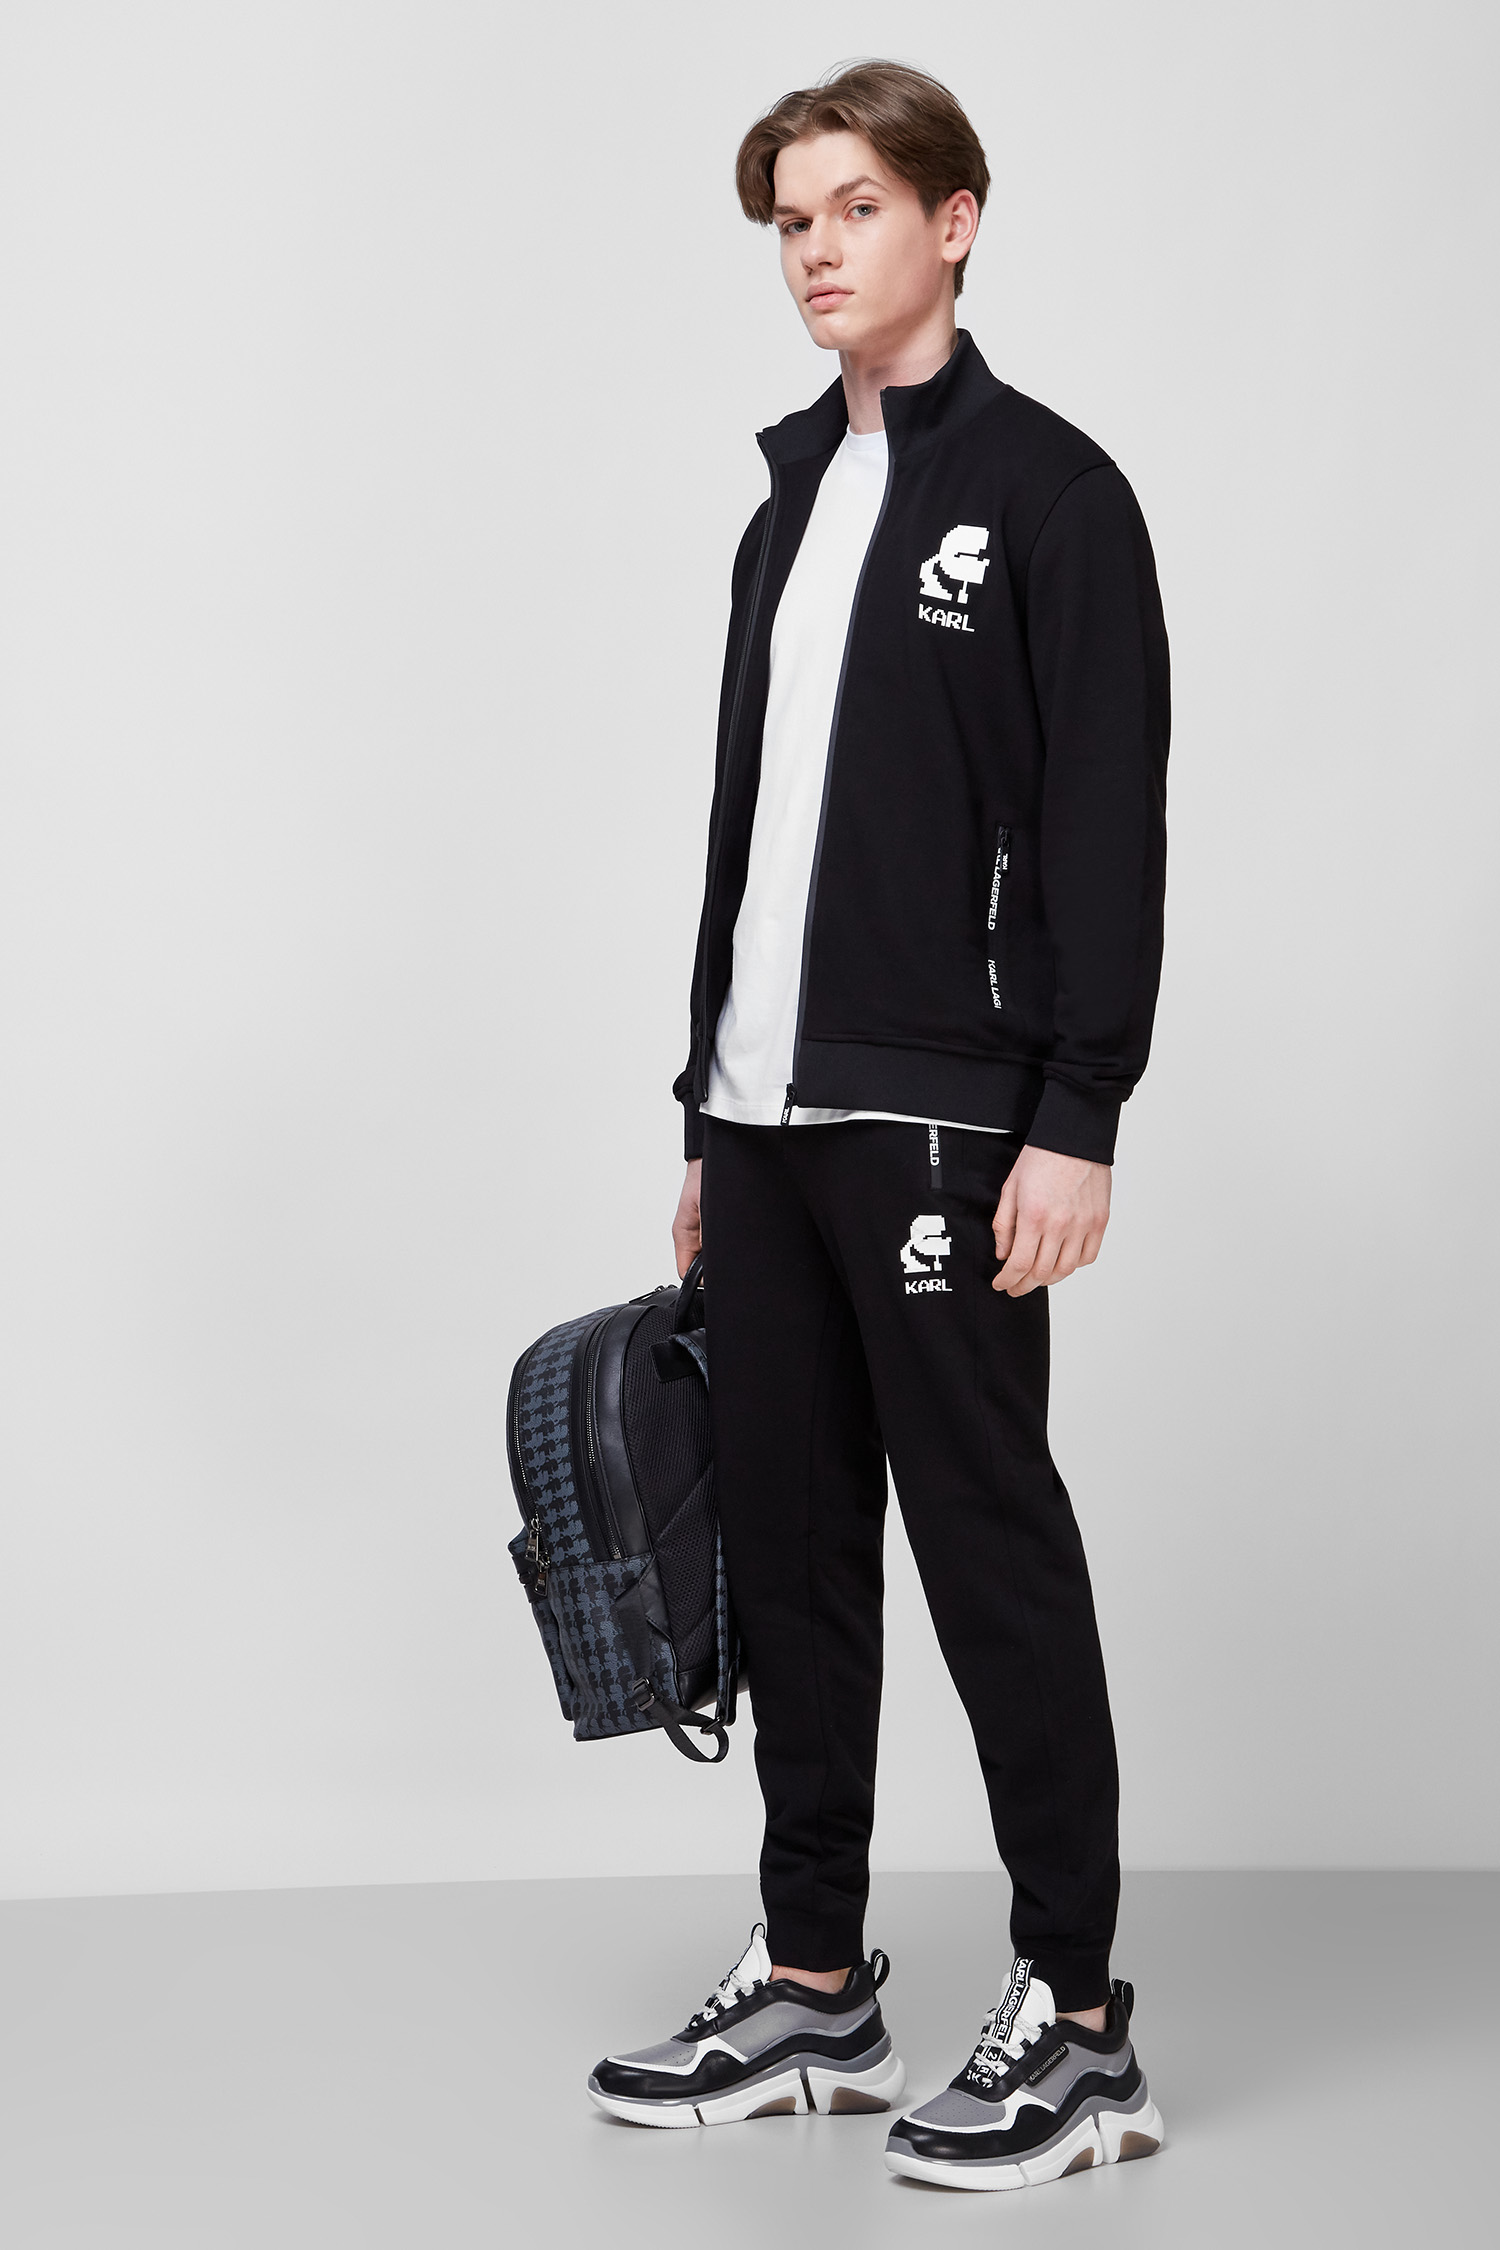 Черная спортивная кофта для парней Karl Lagerfeld 511900.705003;990